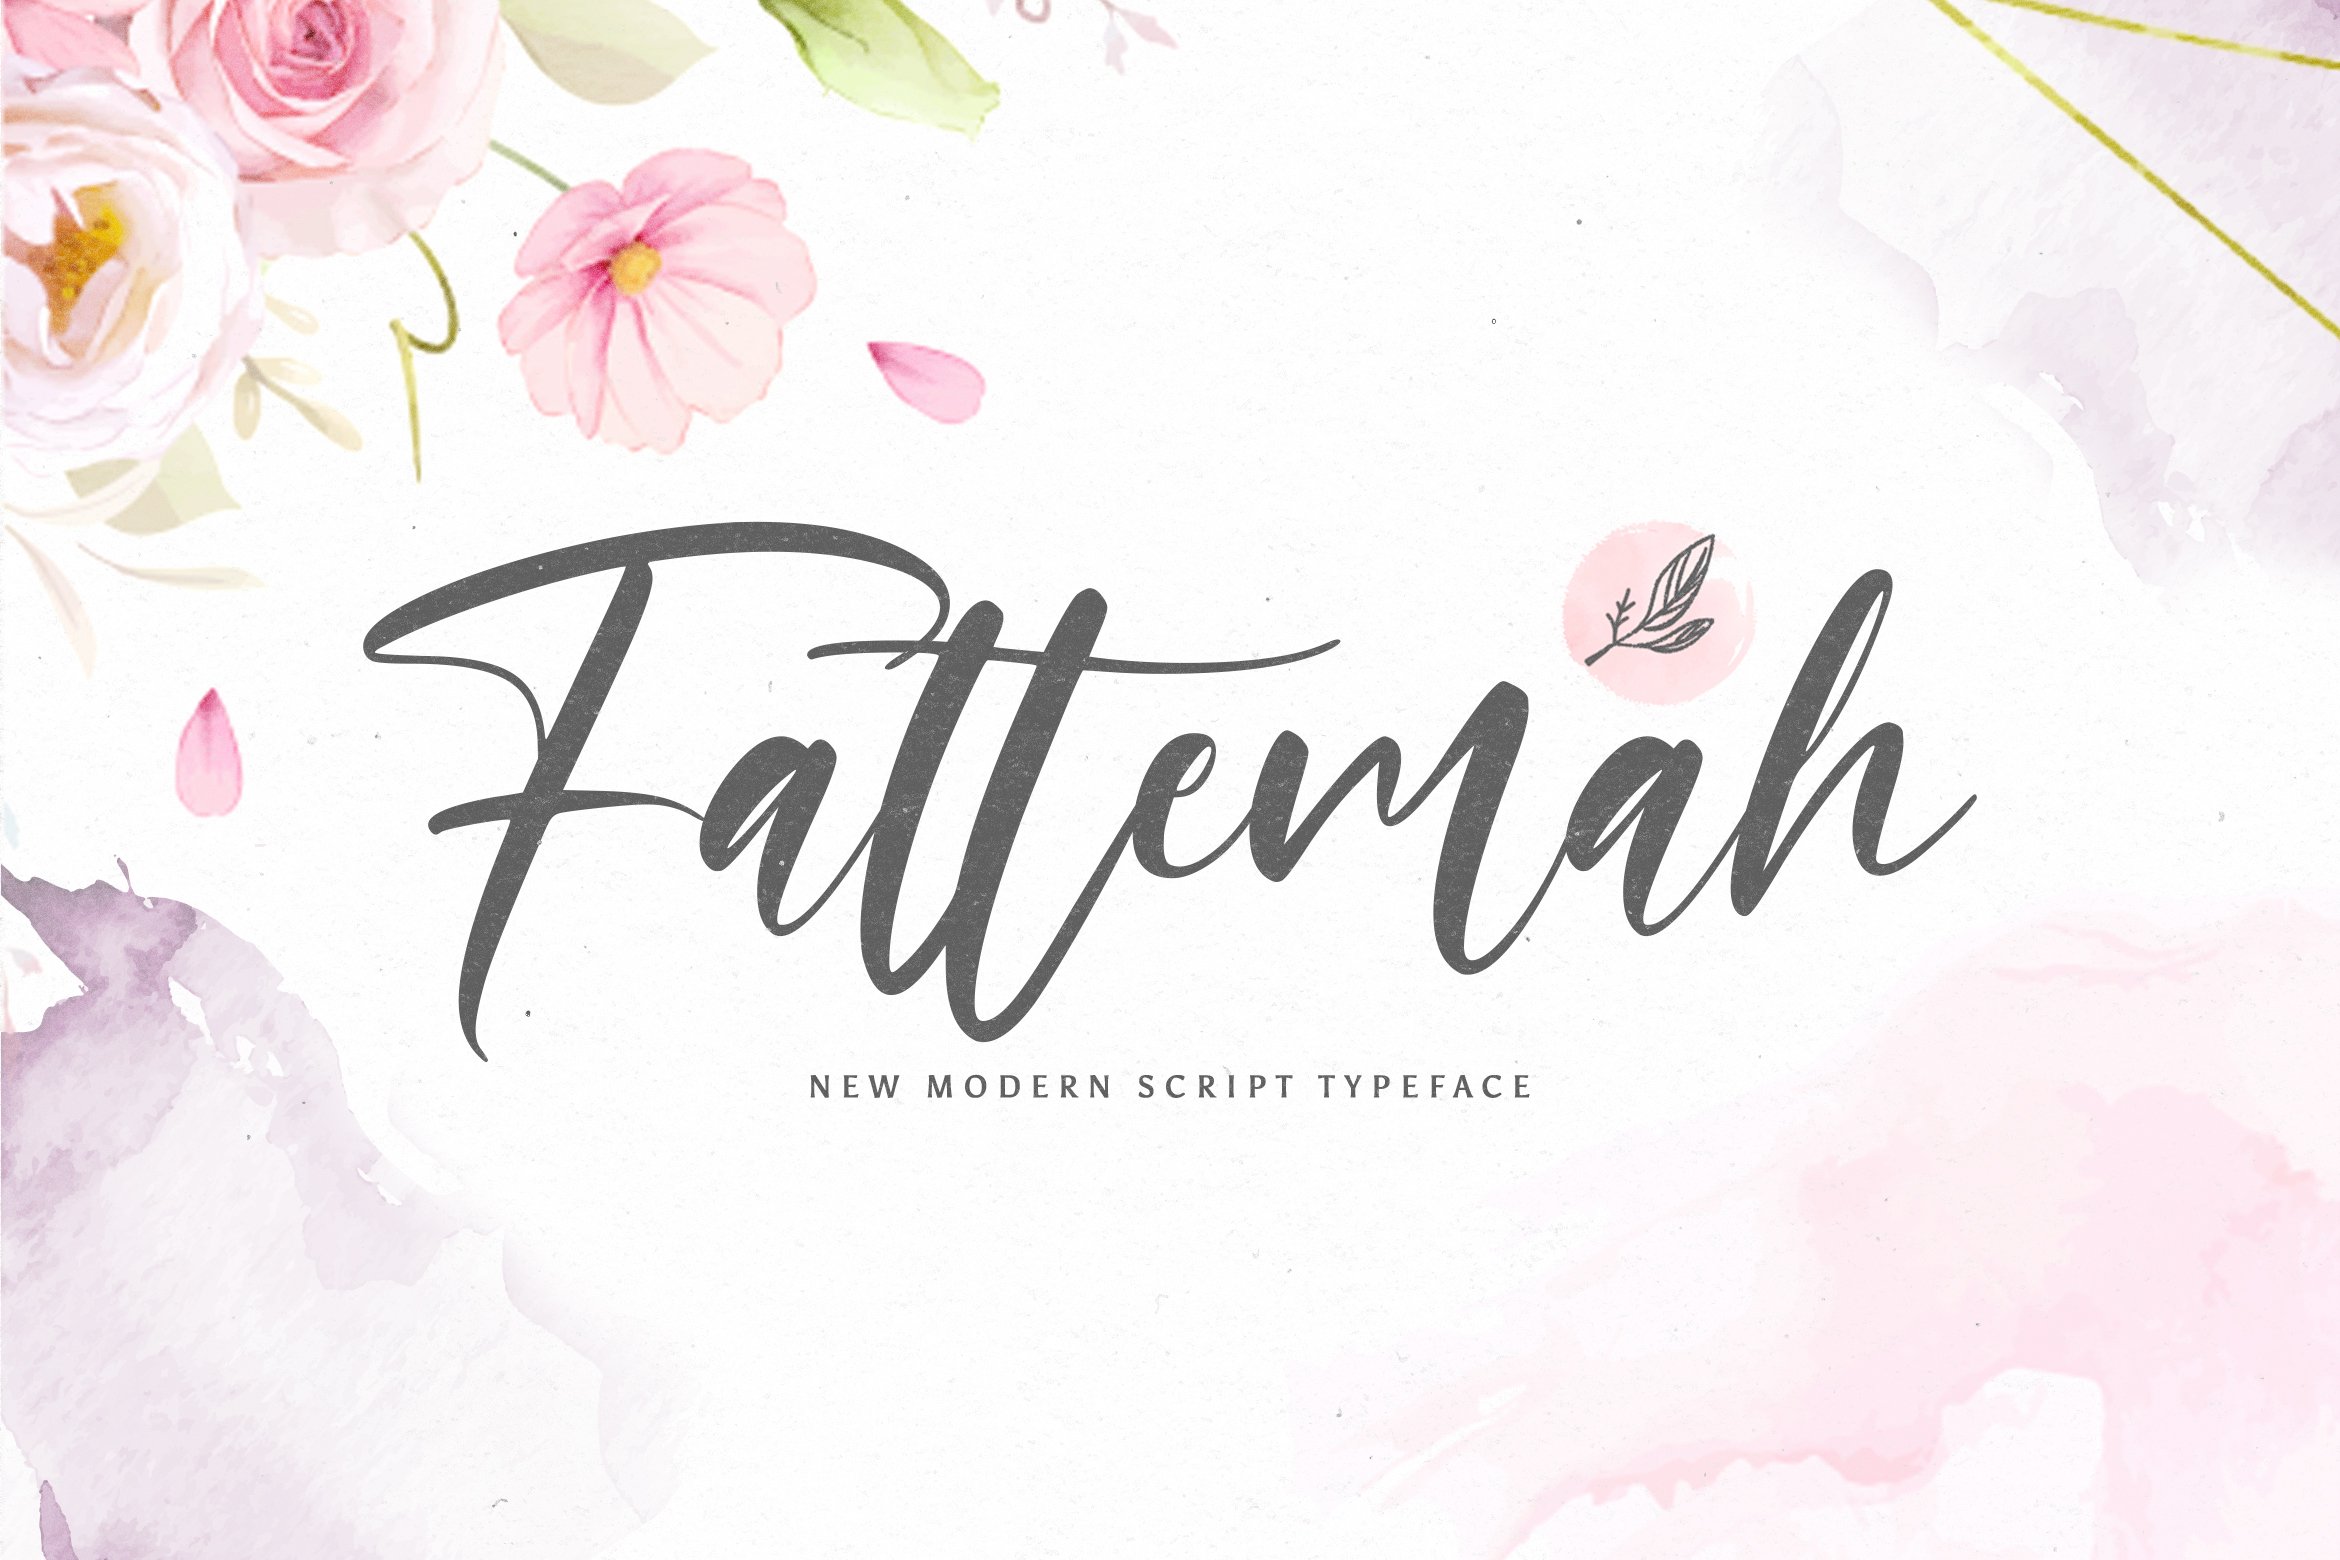 Fattemah - Handwritten Font cover image.